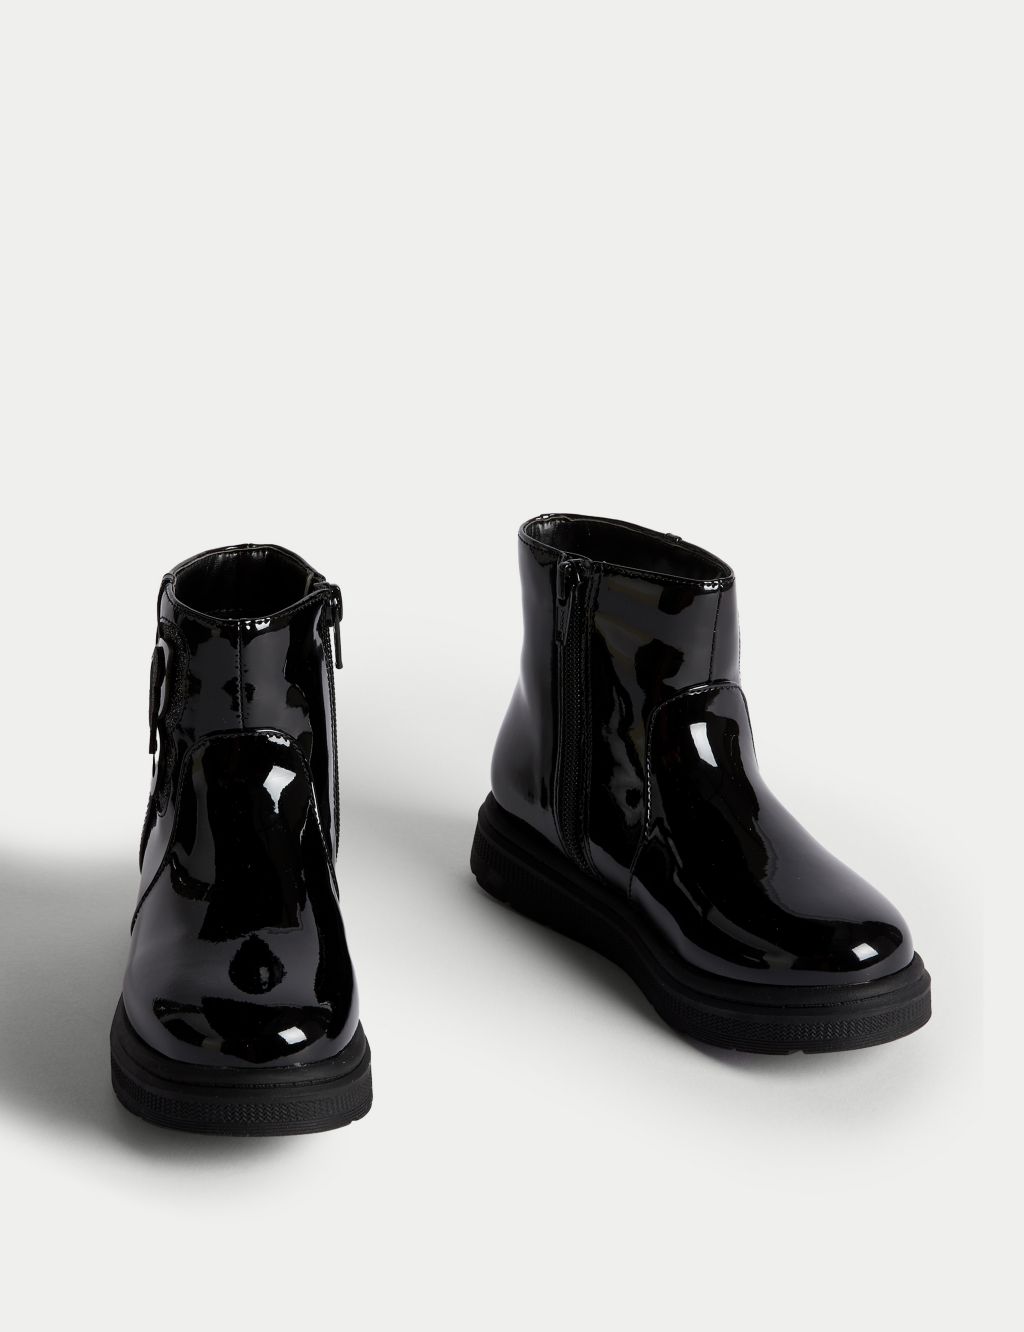 Kids' Patent Freshfeet™ Chelsea Boots (4 Small - 2 Large) image 2